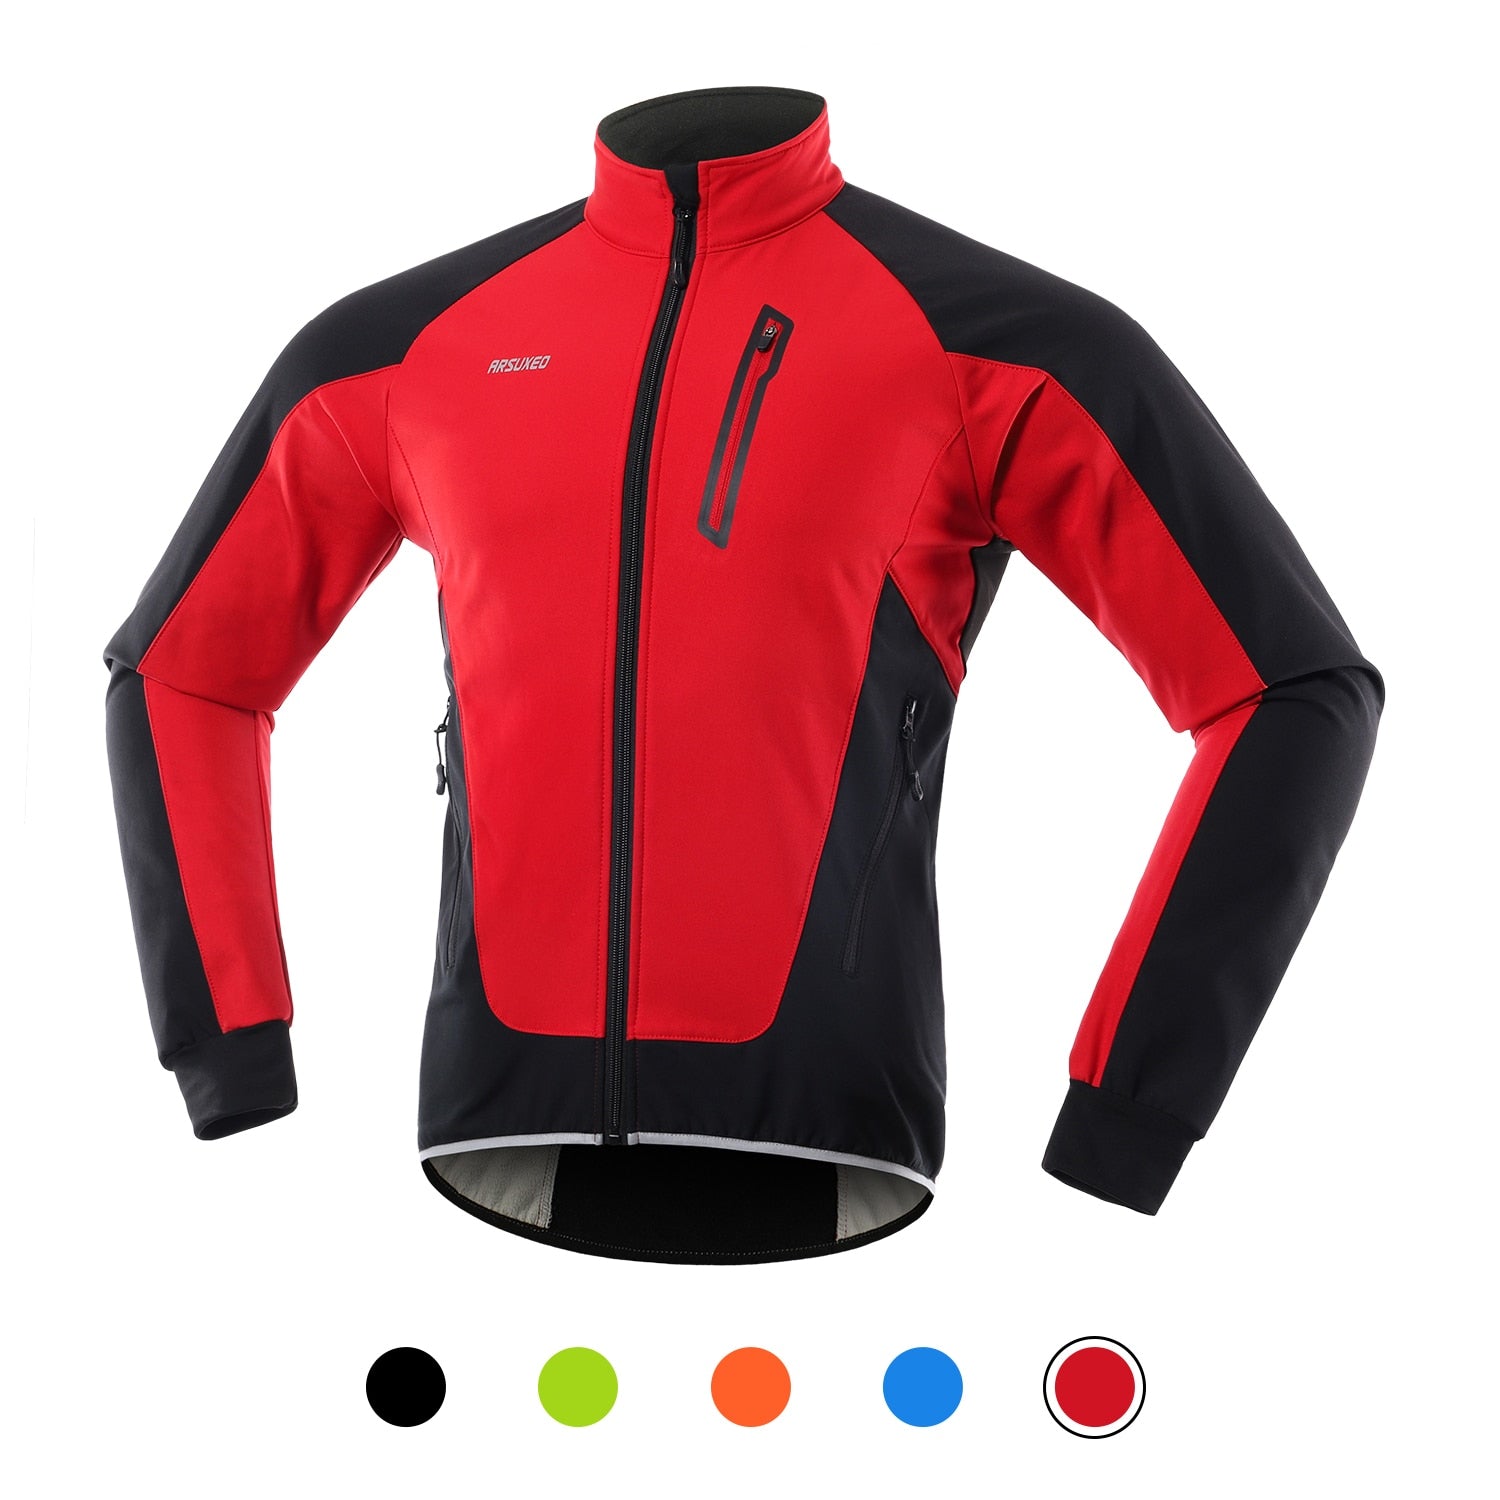 ARSUXEO Hi-Viz Men's Winter Waterproof/Windproof Thermal Fleece-lined Cycling Jacket - Reflective/Red/Black